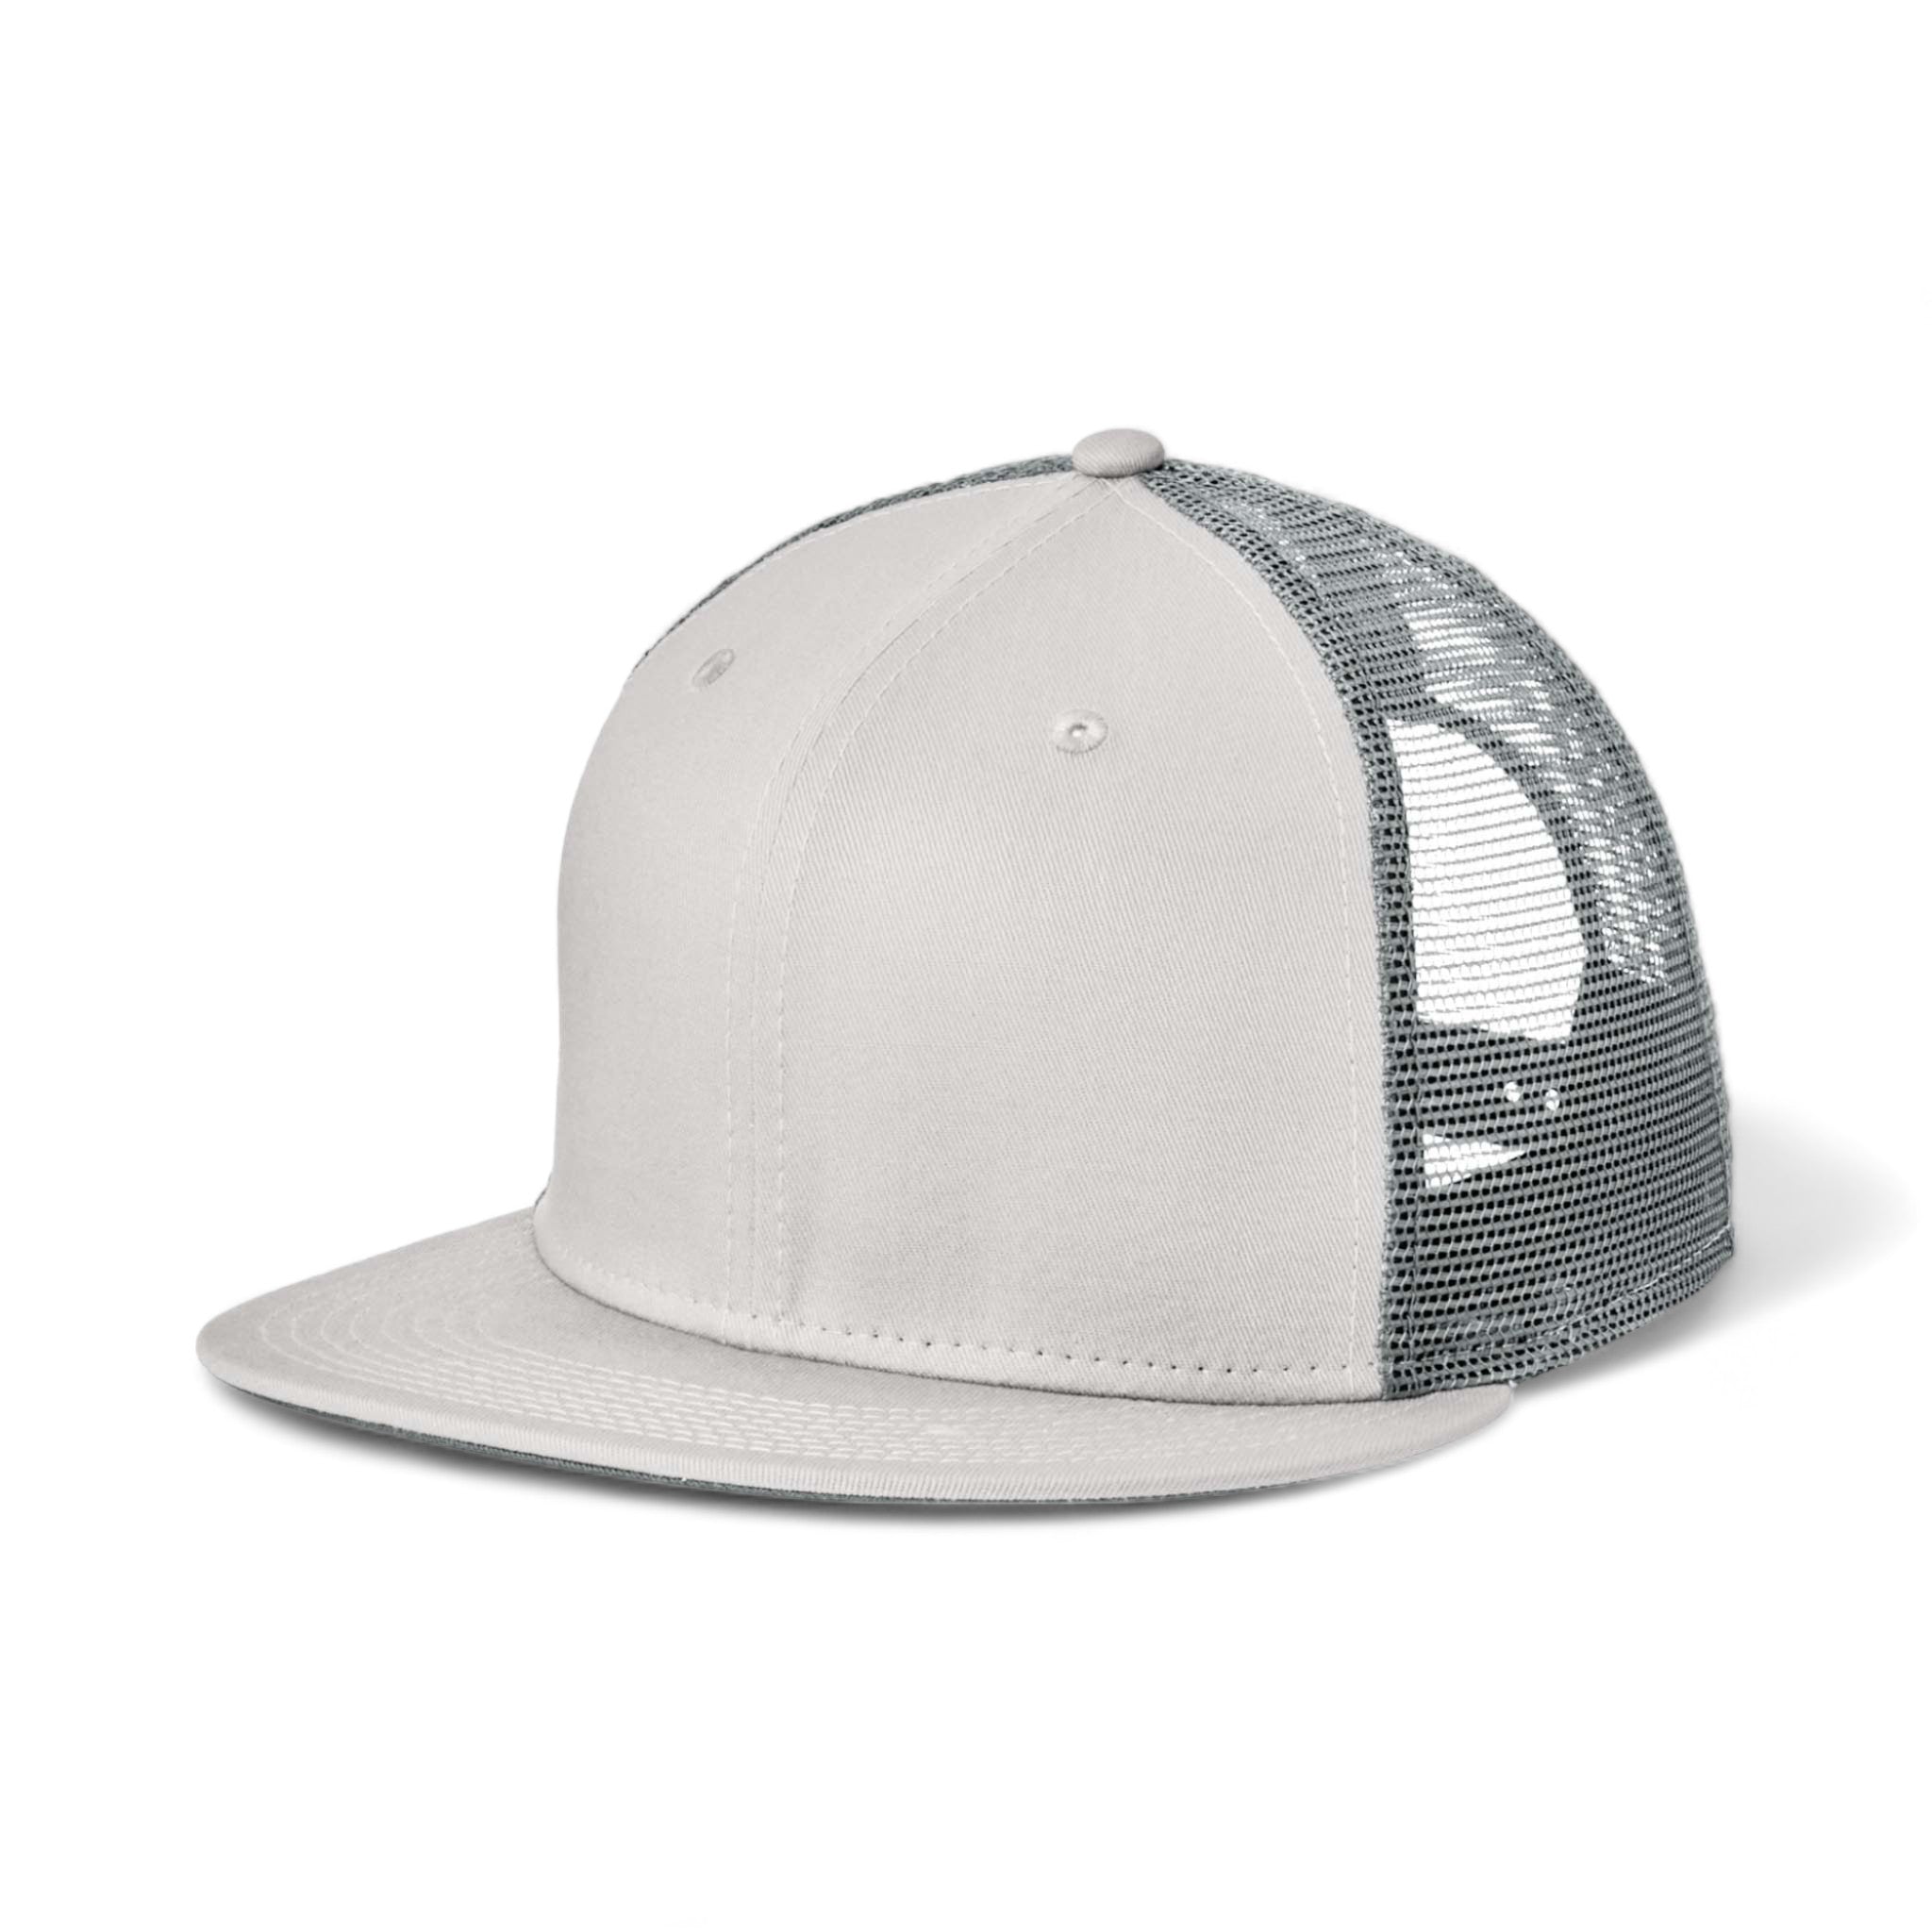 Side view of New Era NE4030 custom hat in grey and graphite